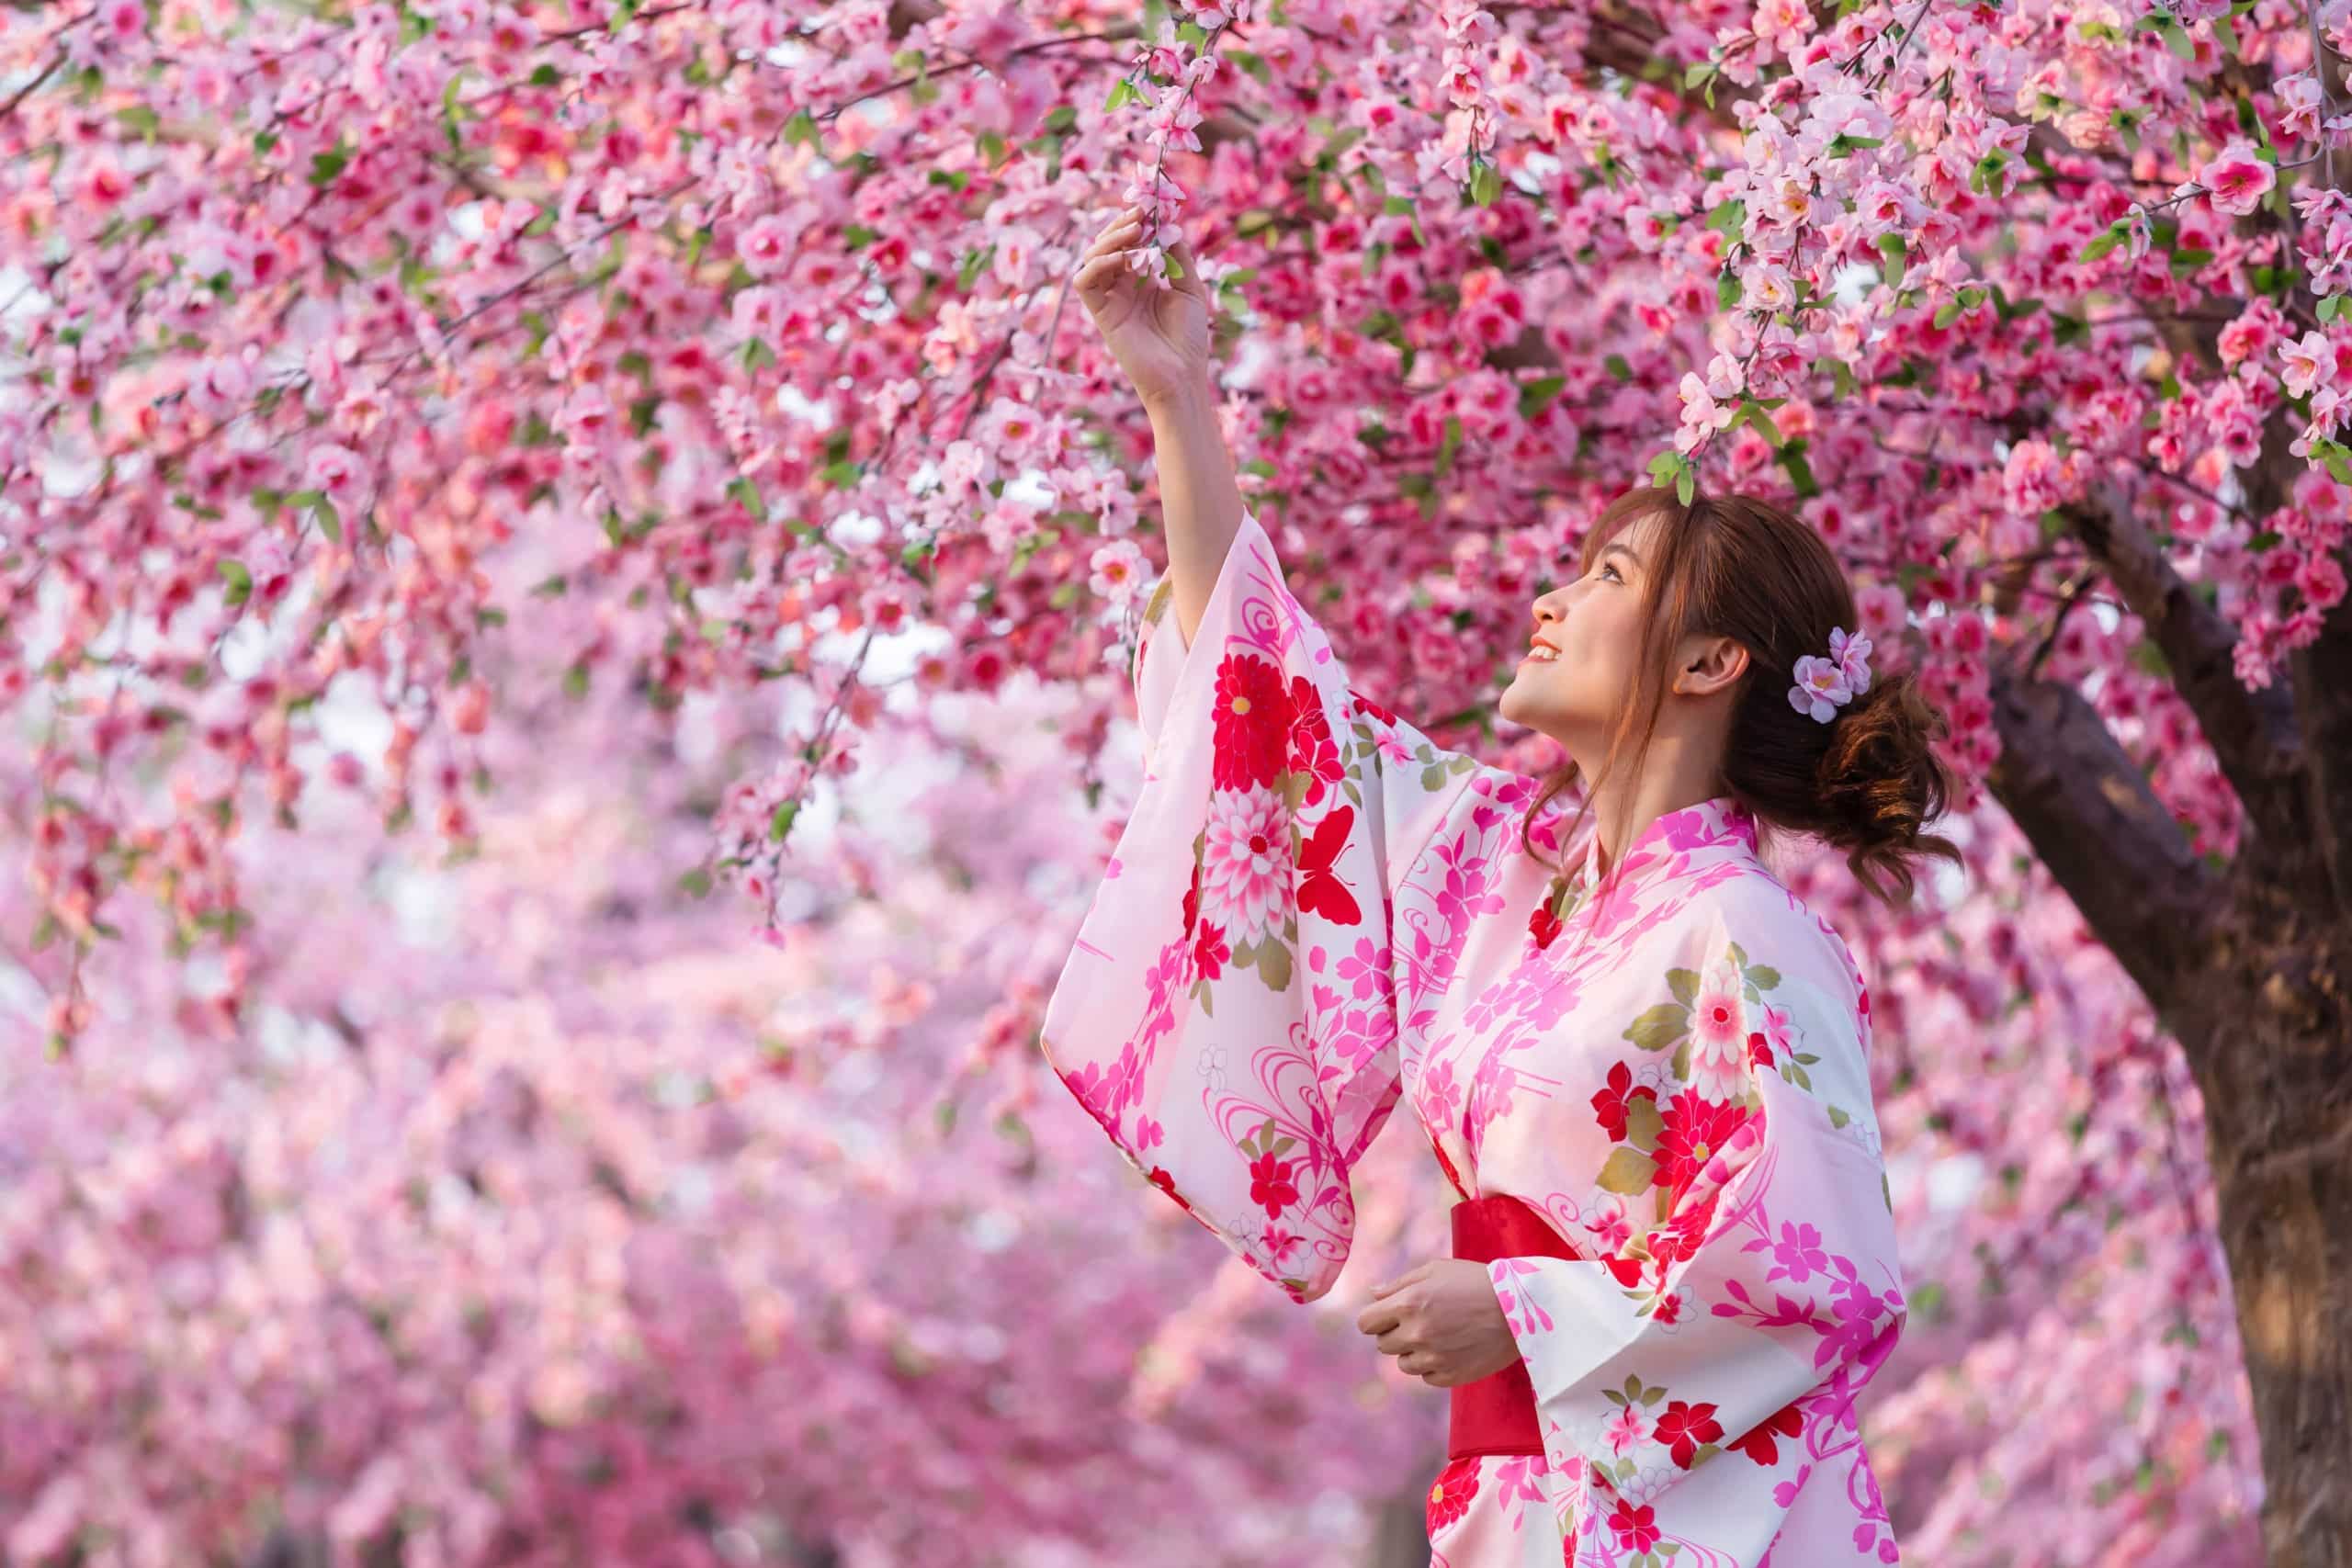 Beautiful Japanese woman in yukata or kimono dress enjoying the cherry blossoms